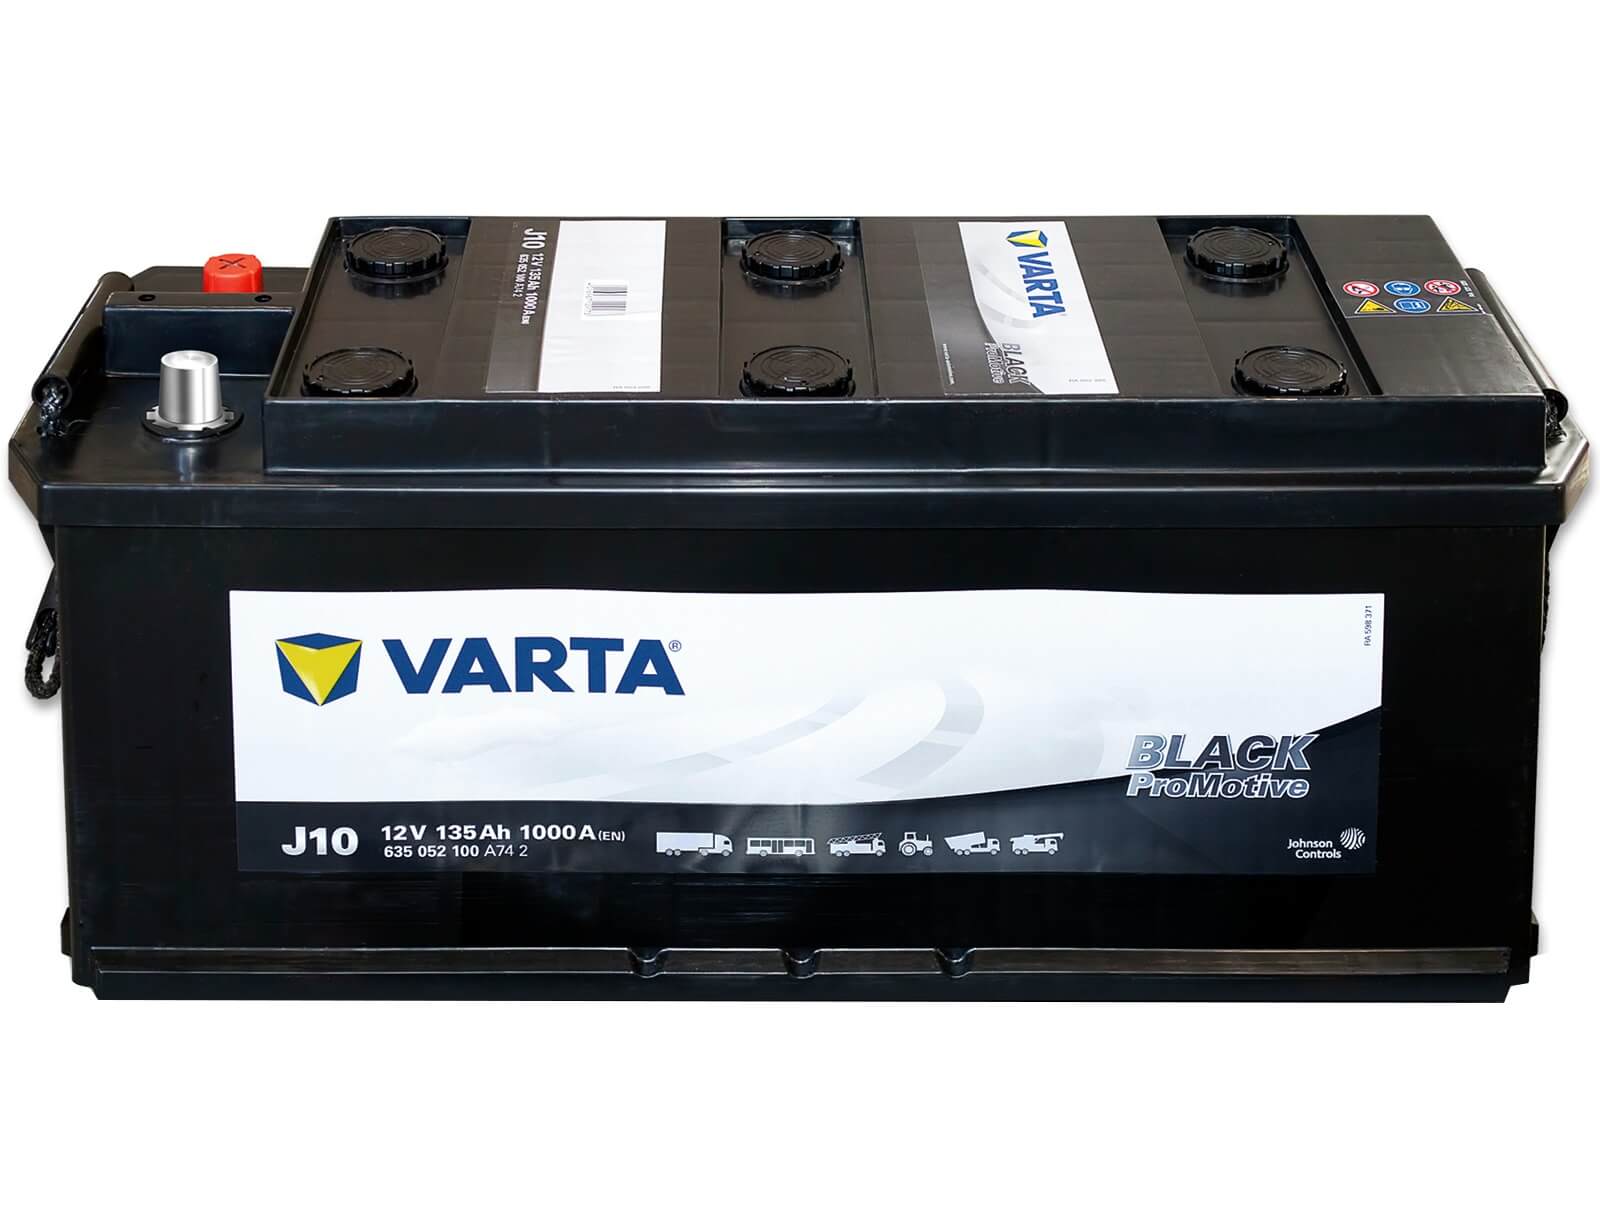 Varta J10 Promotive Black 12V 135Ah 1000A/EN